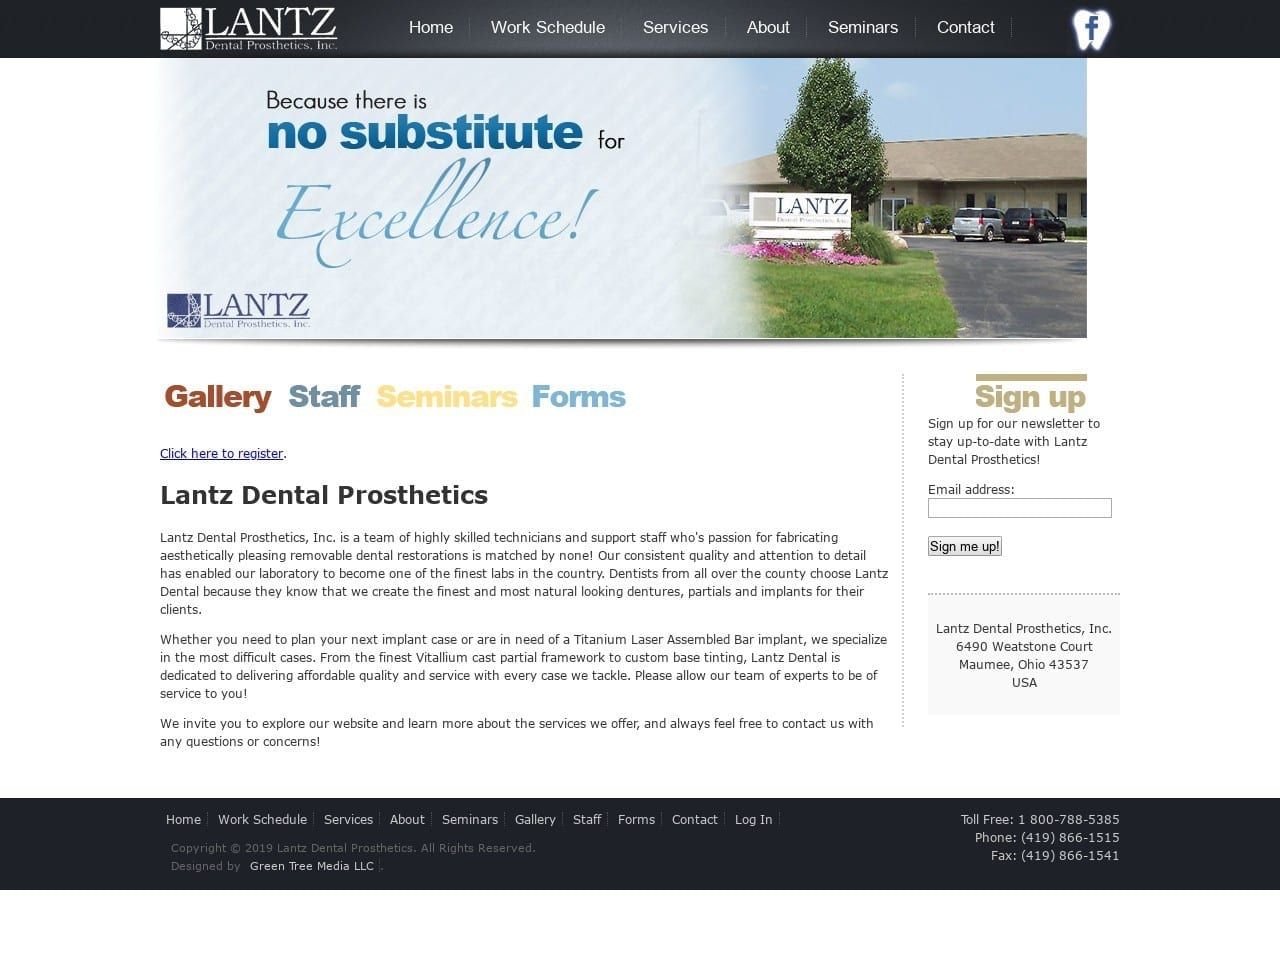 Lantz Dental Prosthetics Website Screenshot from lantzdental.com